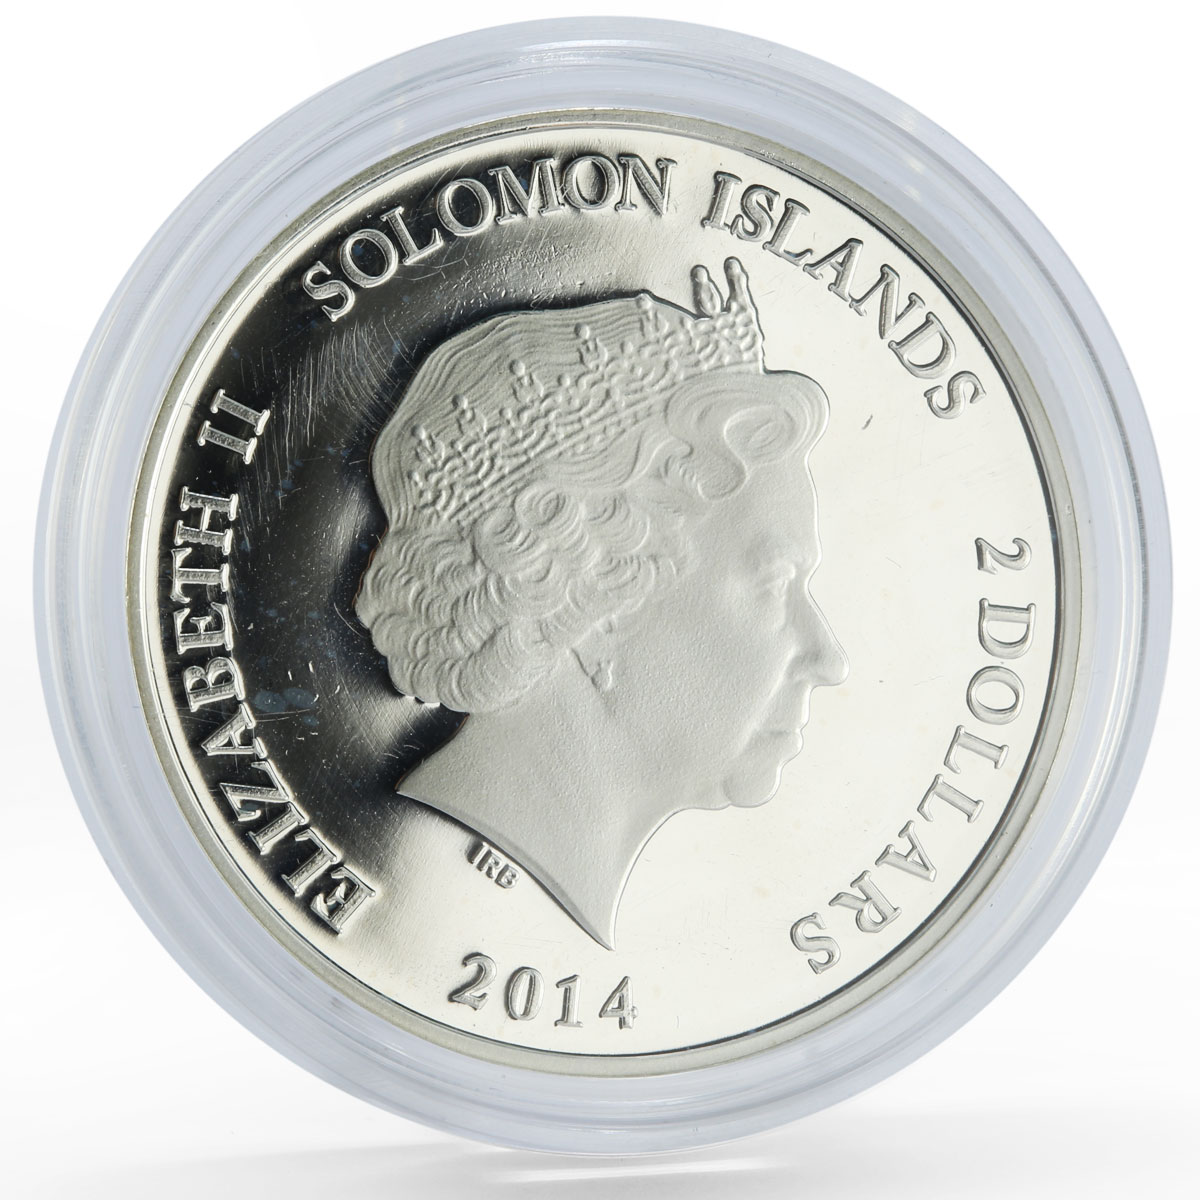 Solomon Islands 2 dollars Fairy Tales Pinocchio colored silver coin 2014